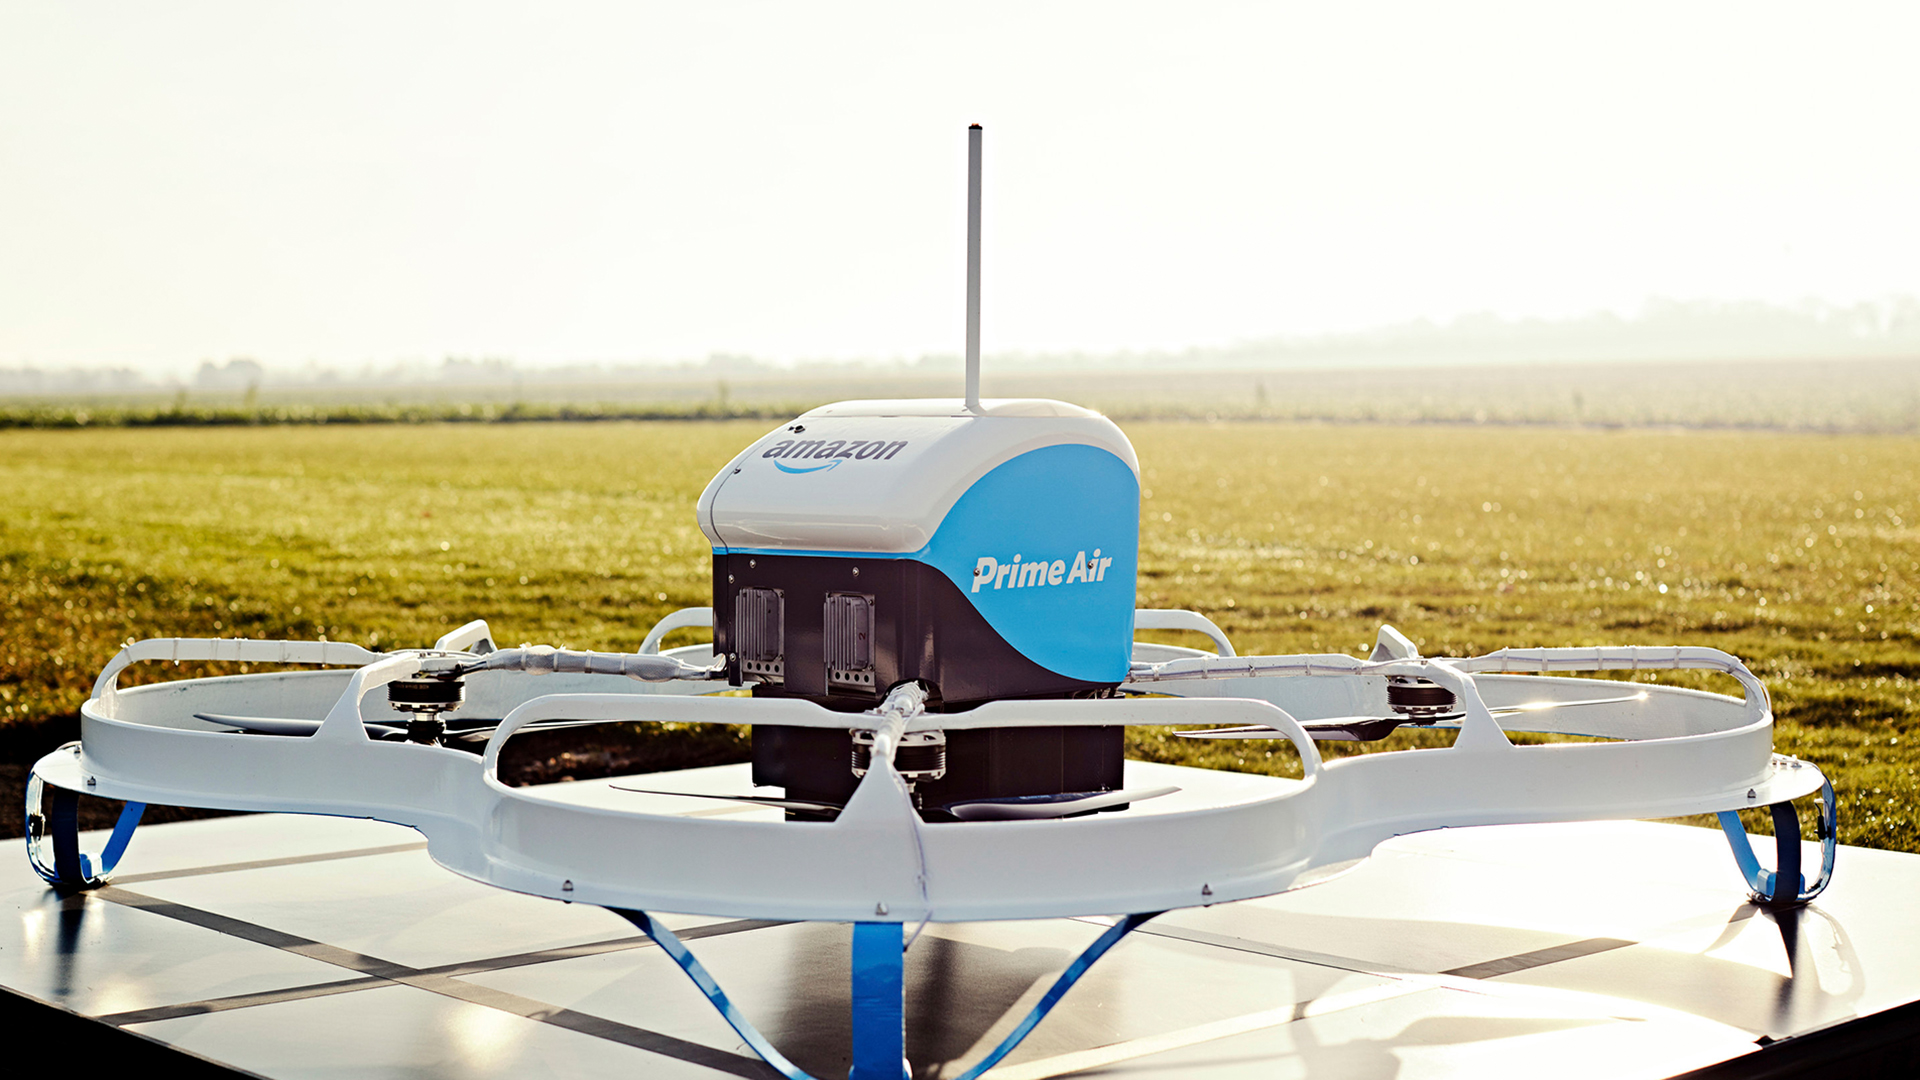 Drohne "Prime Air" von Amazon | AP